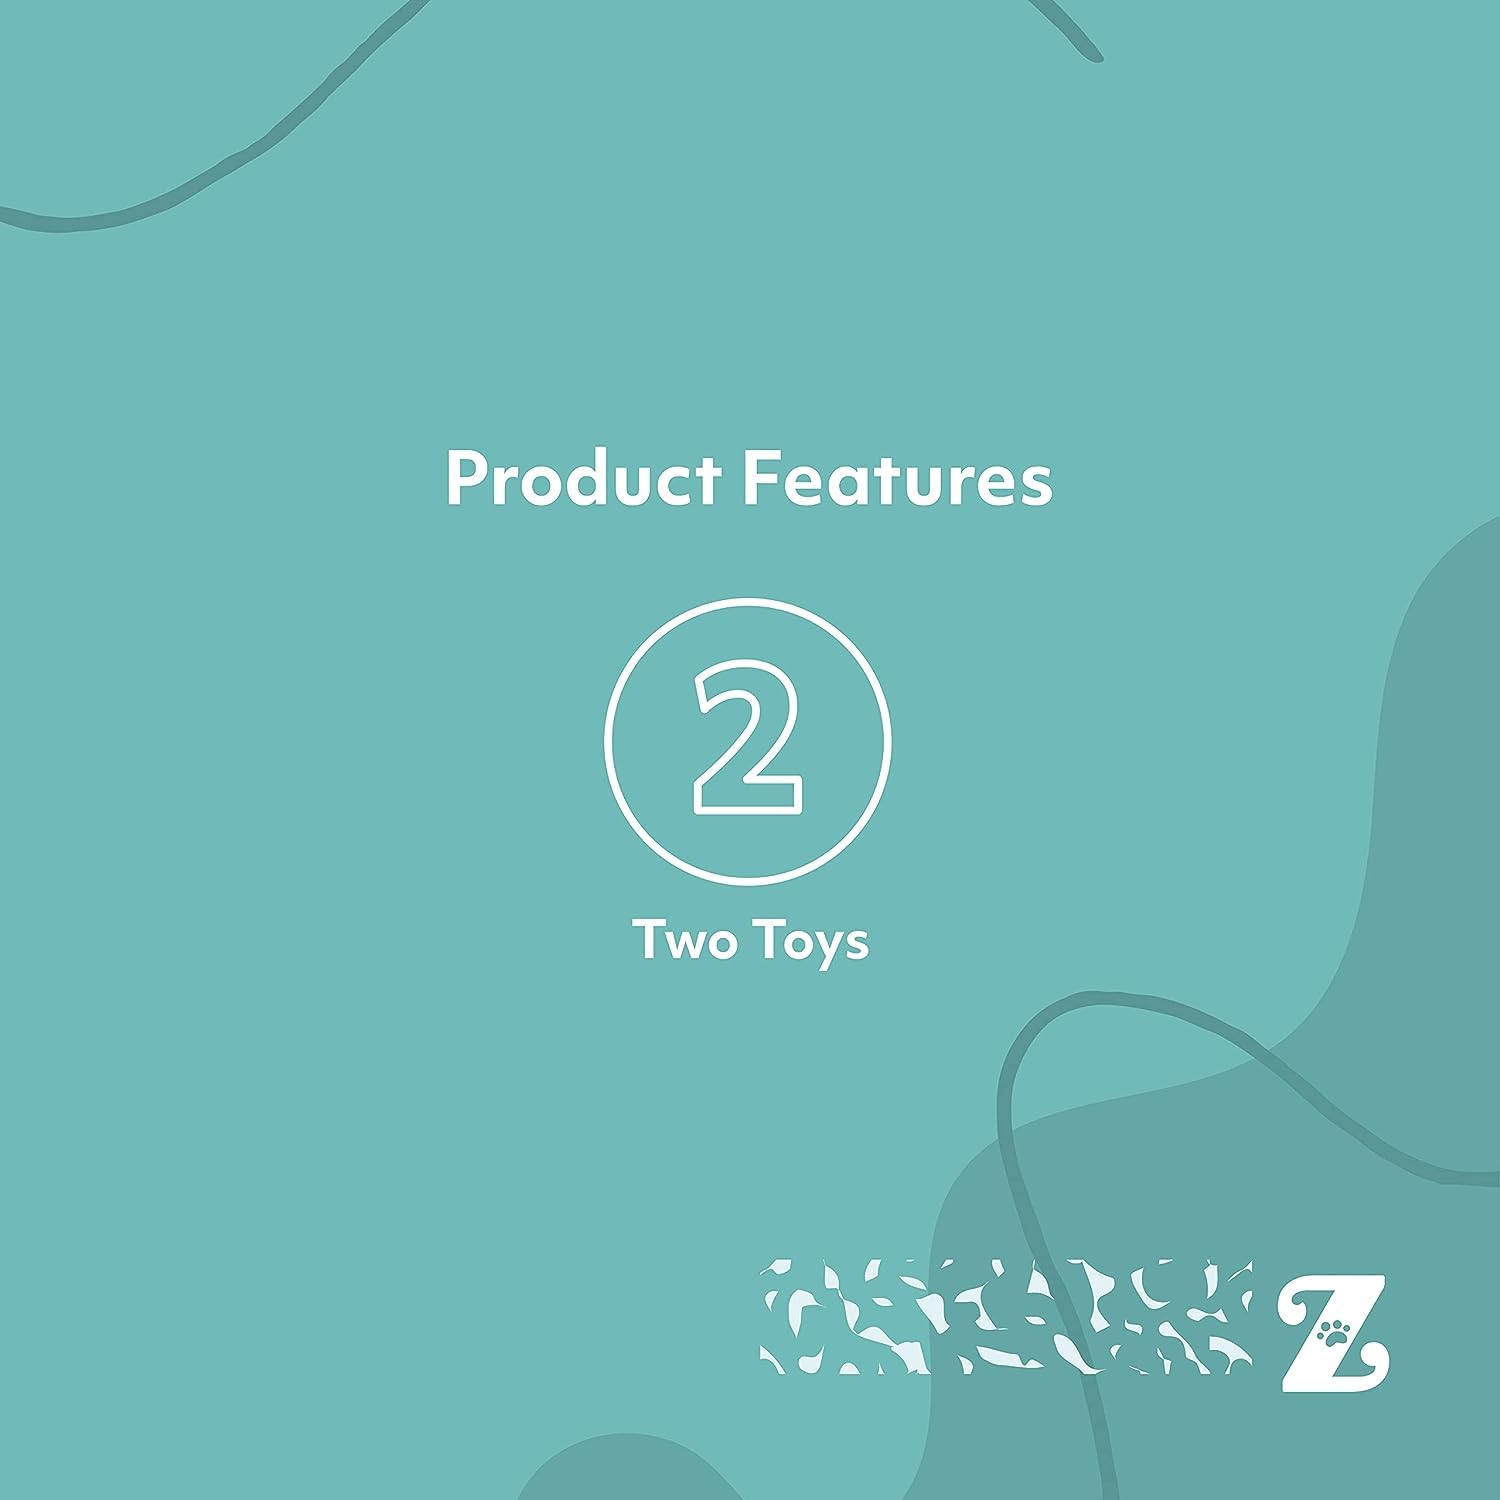 Zippy Paws ZippyClaws Ladybug and Bee Plush Catnip Cat Toy - 2 Pack  